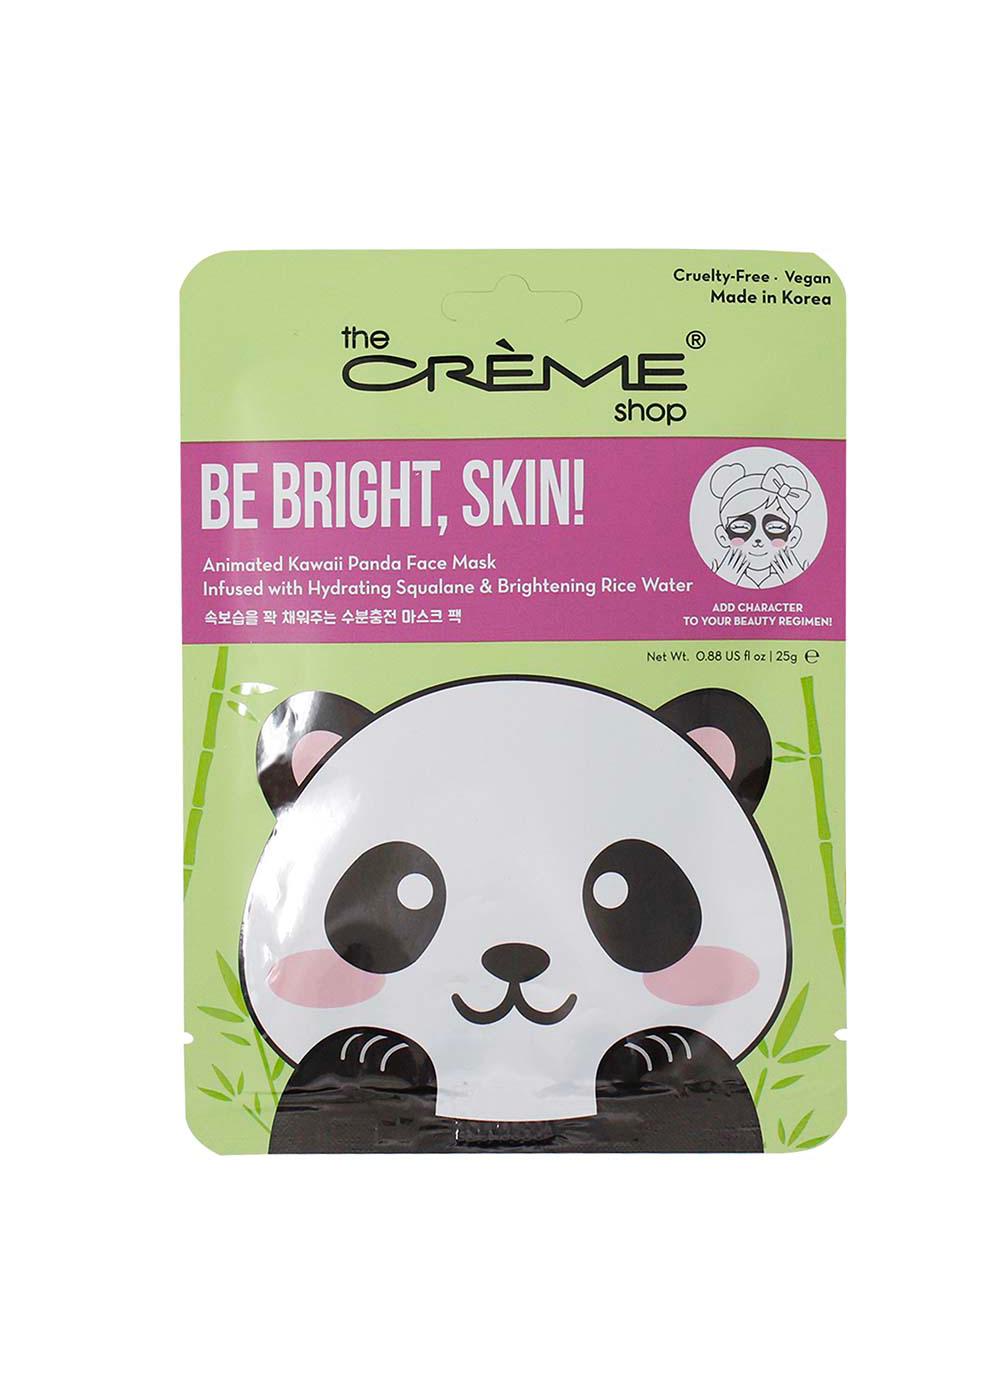 The Crème Shop Be Bright, Skin! Animated Kawaii Panda Face Mask; image 1 of 2